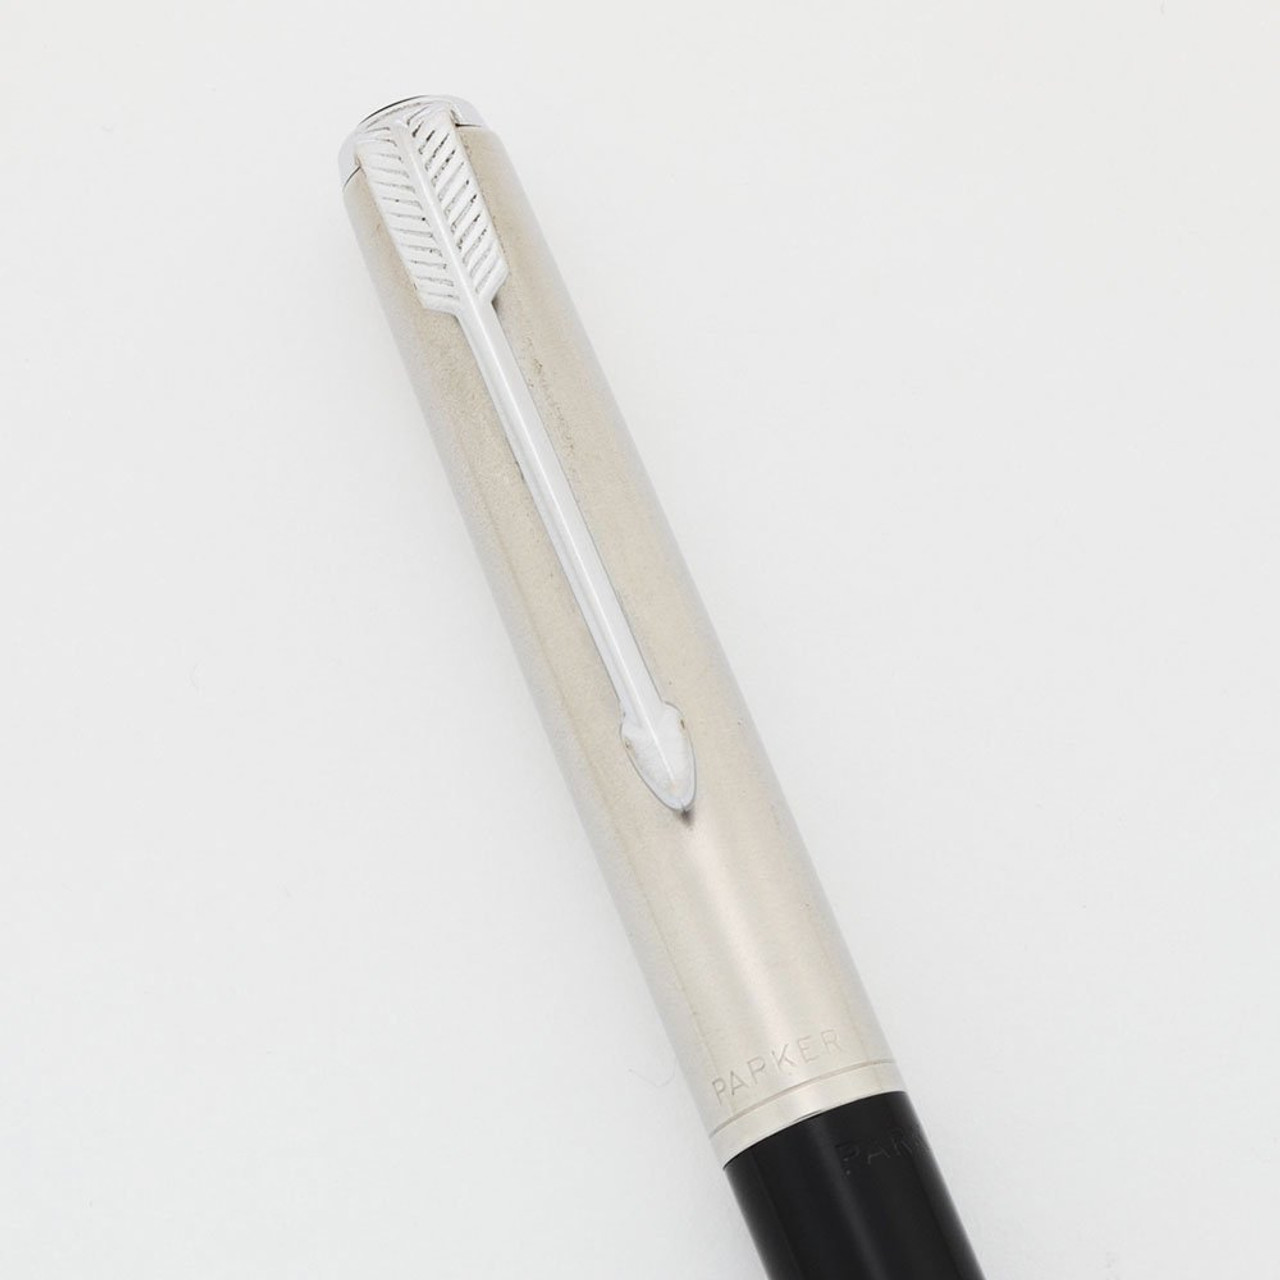 Parker 51 Special Mechanical Pencil - Demi Size, Black w Steel Cap (Excellent, Works Well)